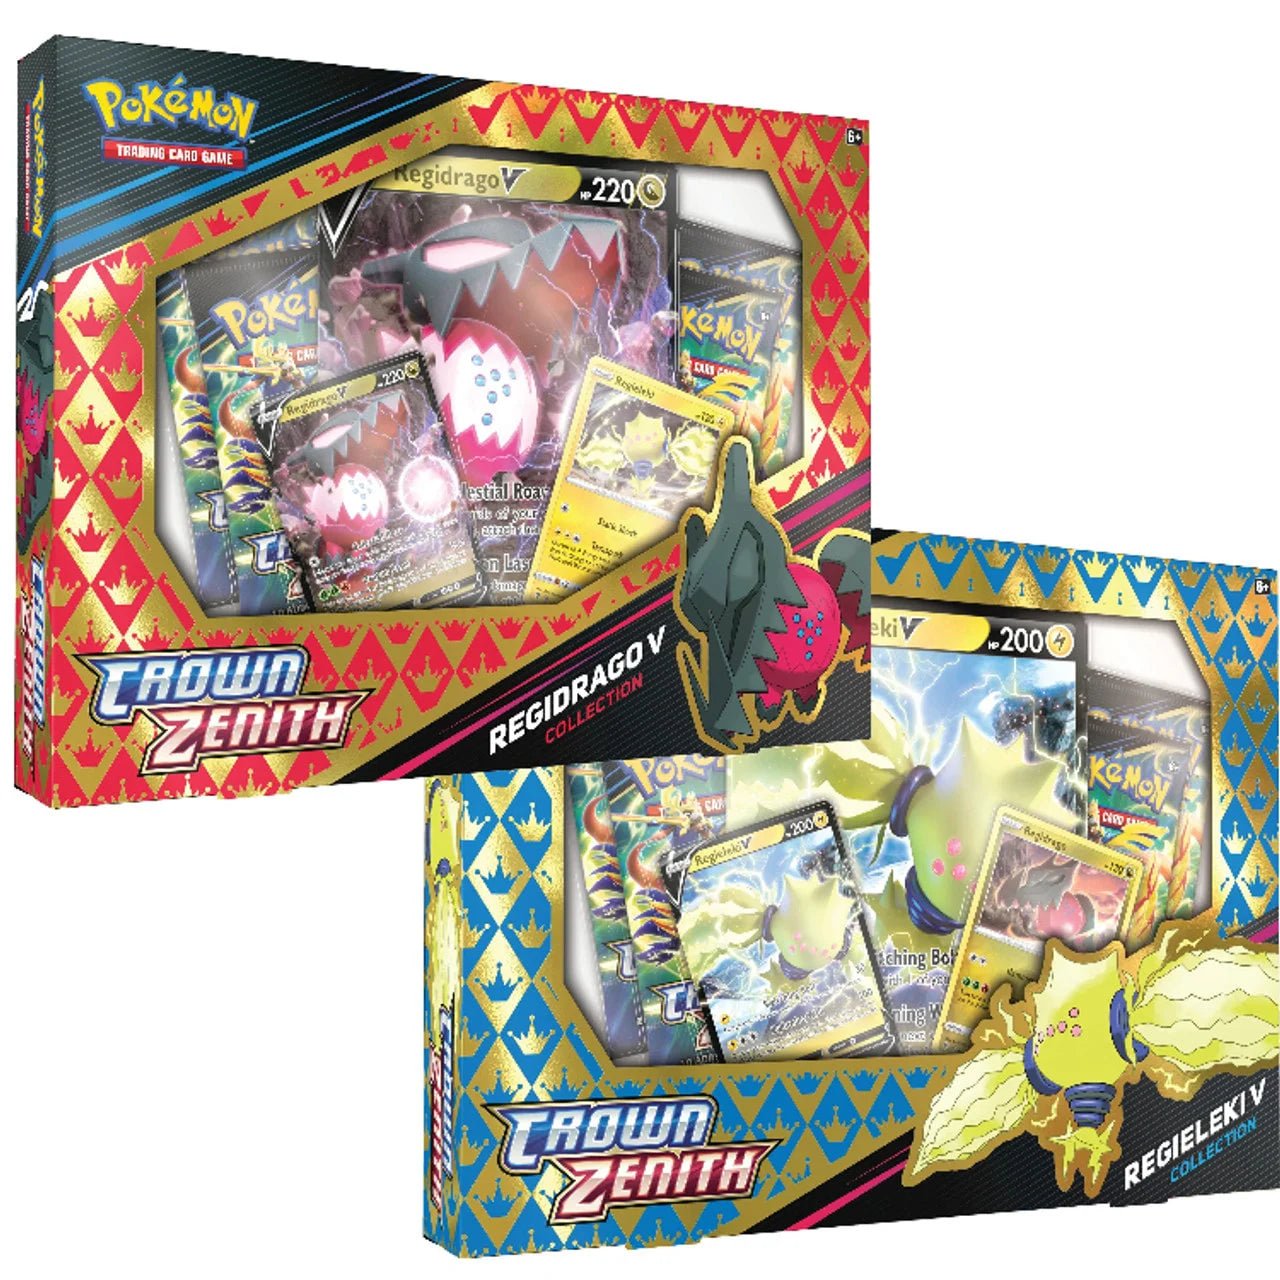 Pokémon TCG Crown Zenith V Collection Box: Regieleki V or Regidrago V - The Fourth Place